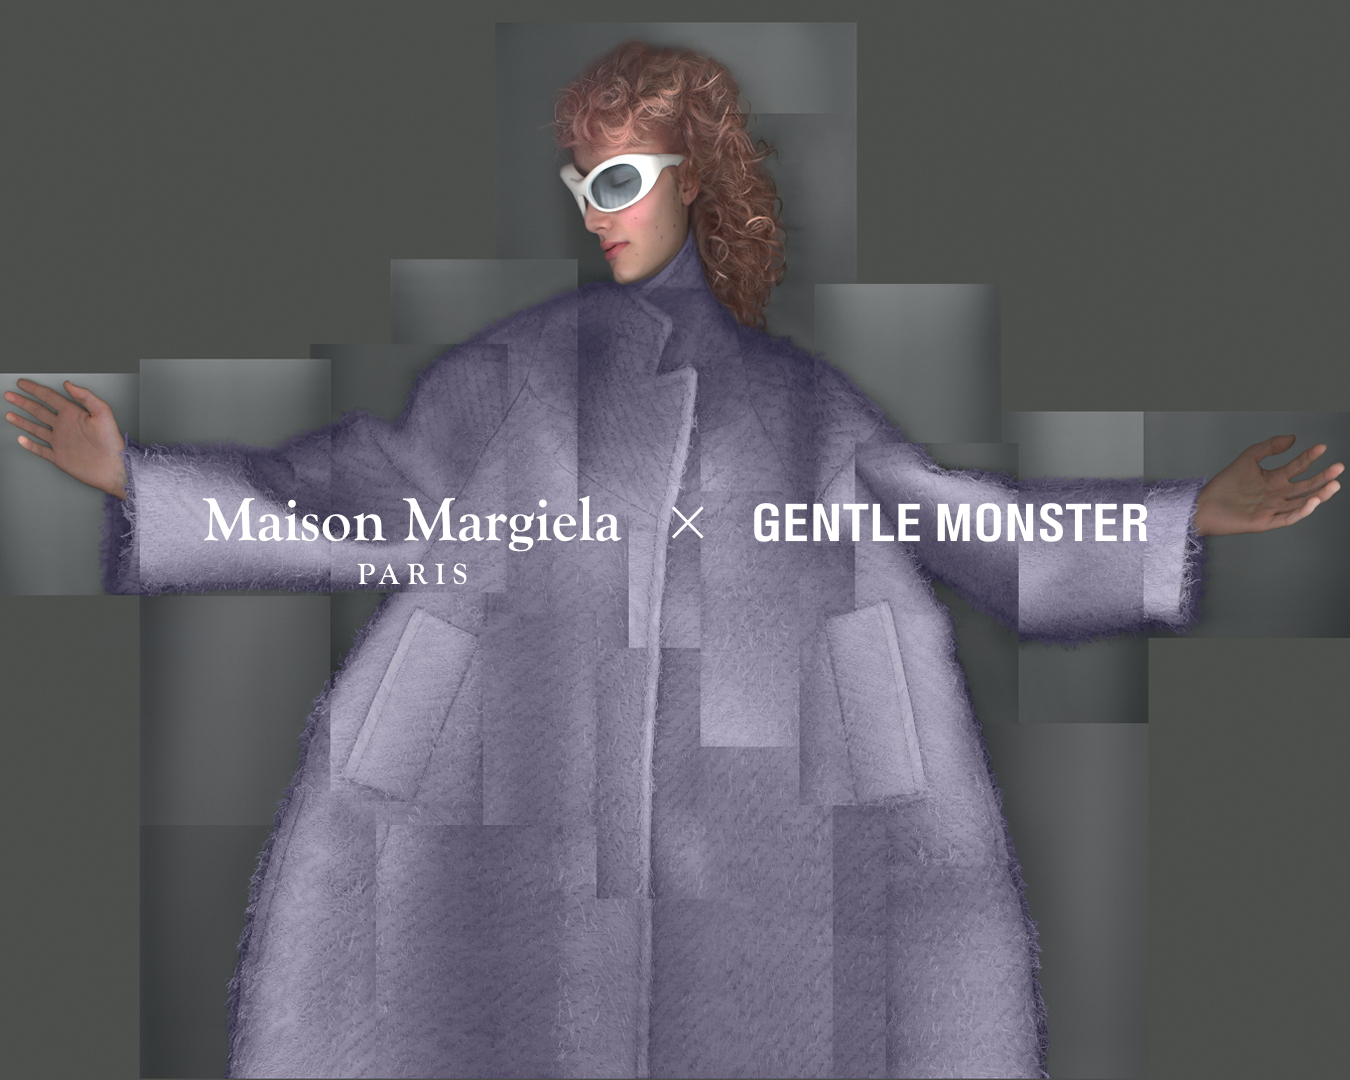 Maison Margiela x Gentle Monster